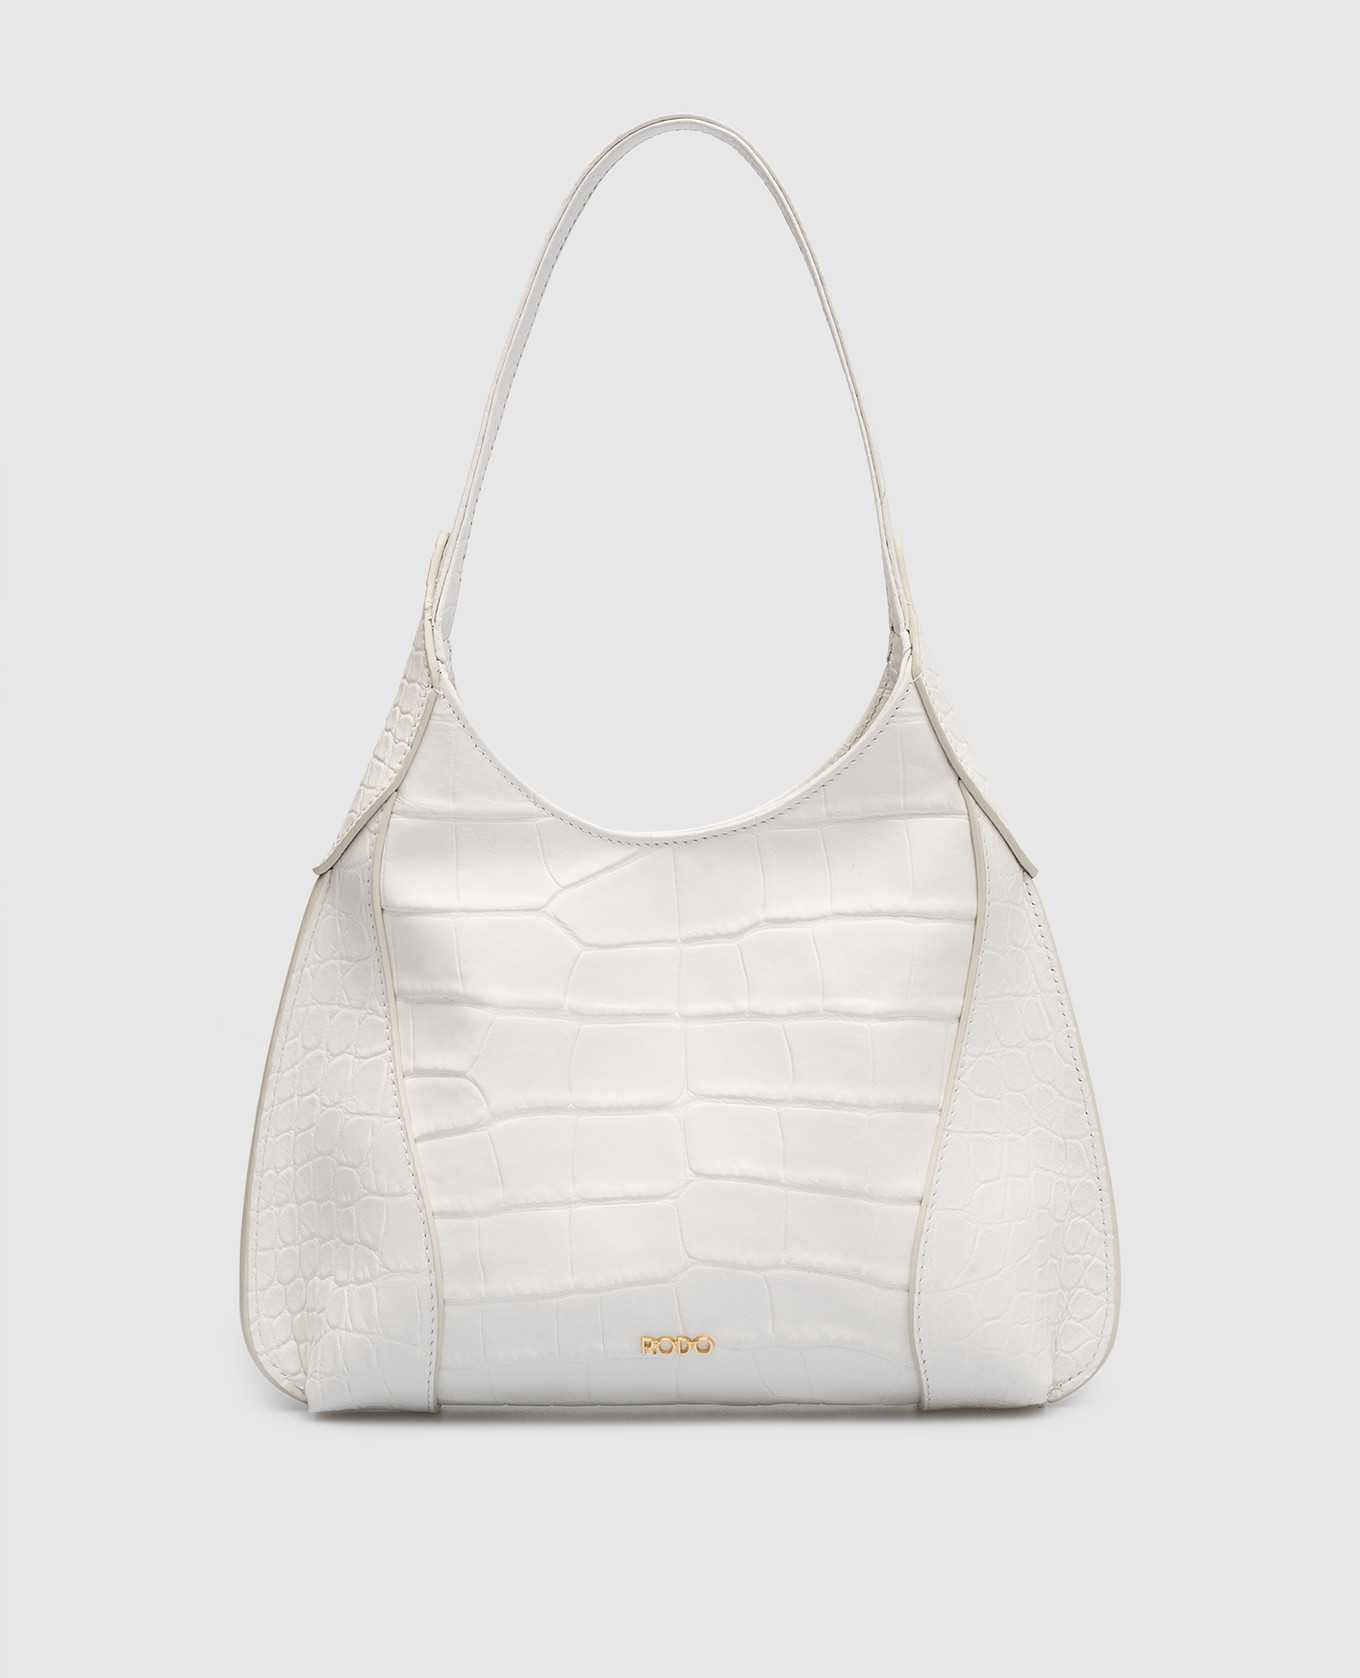 ASMARA white leather hobo bag